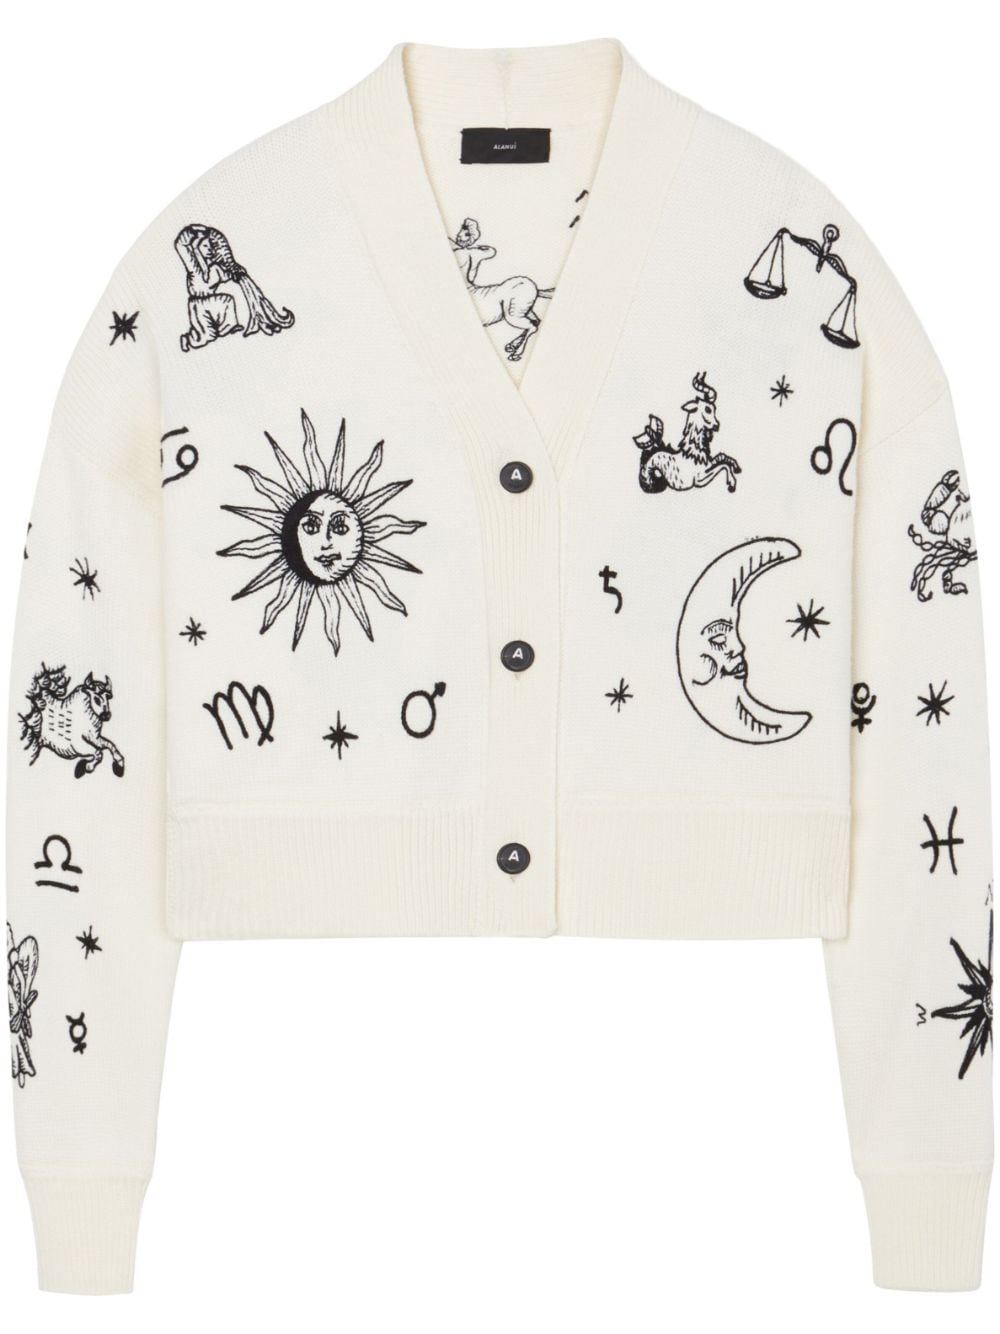 Alanui Horoscope jacquard virgin-wool cardigan - White